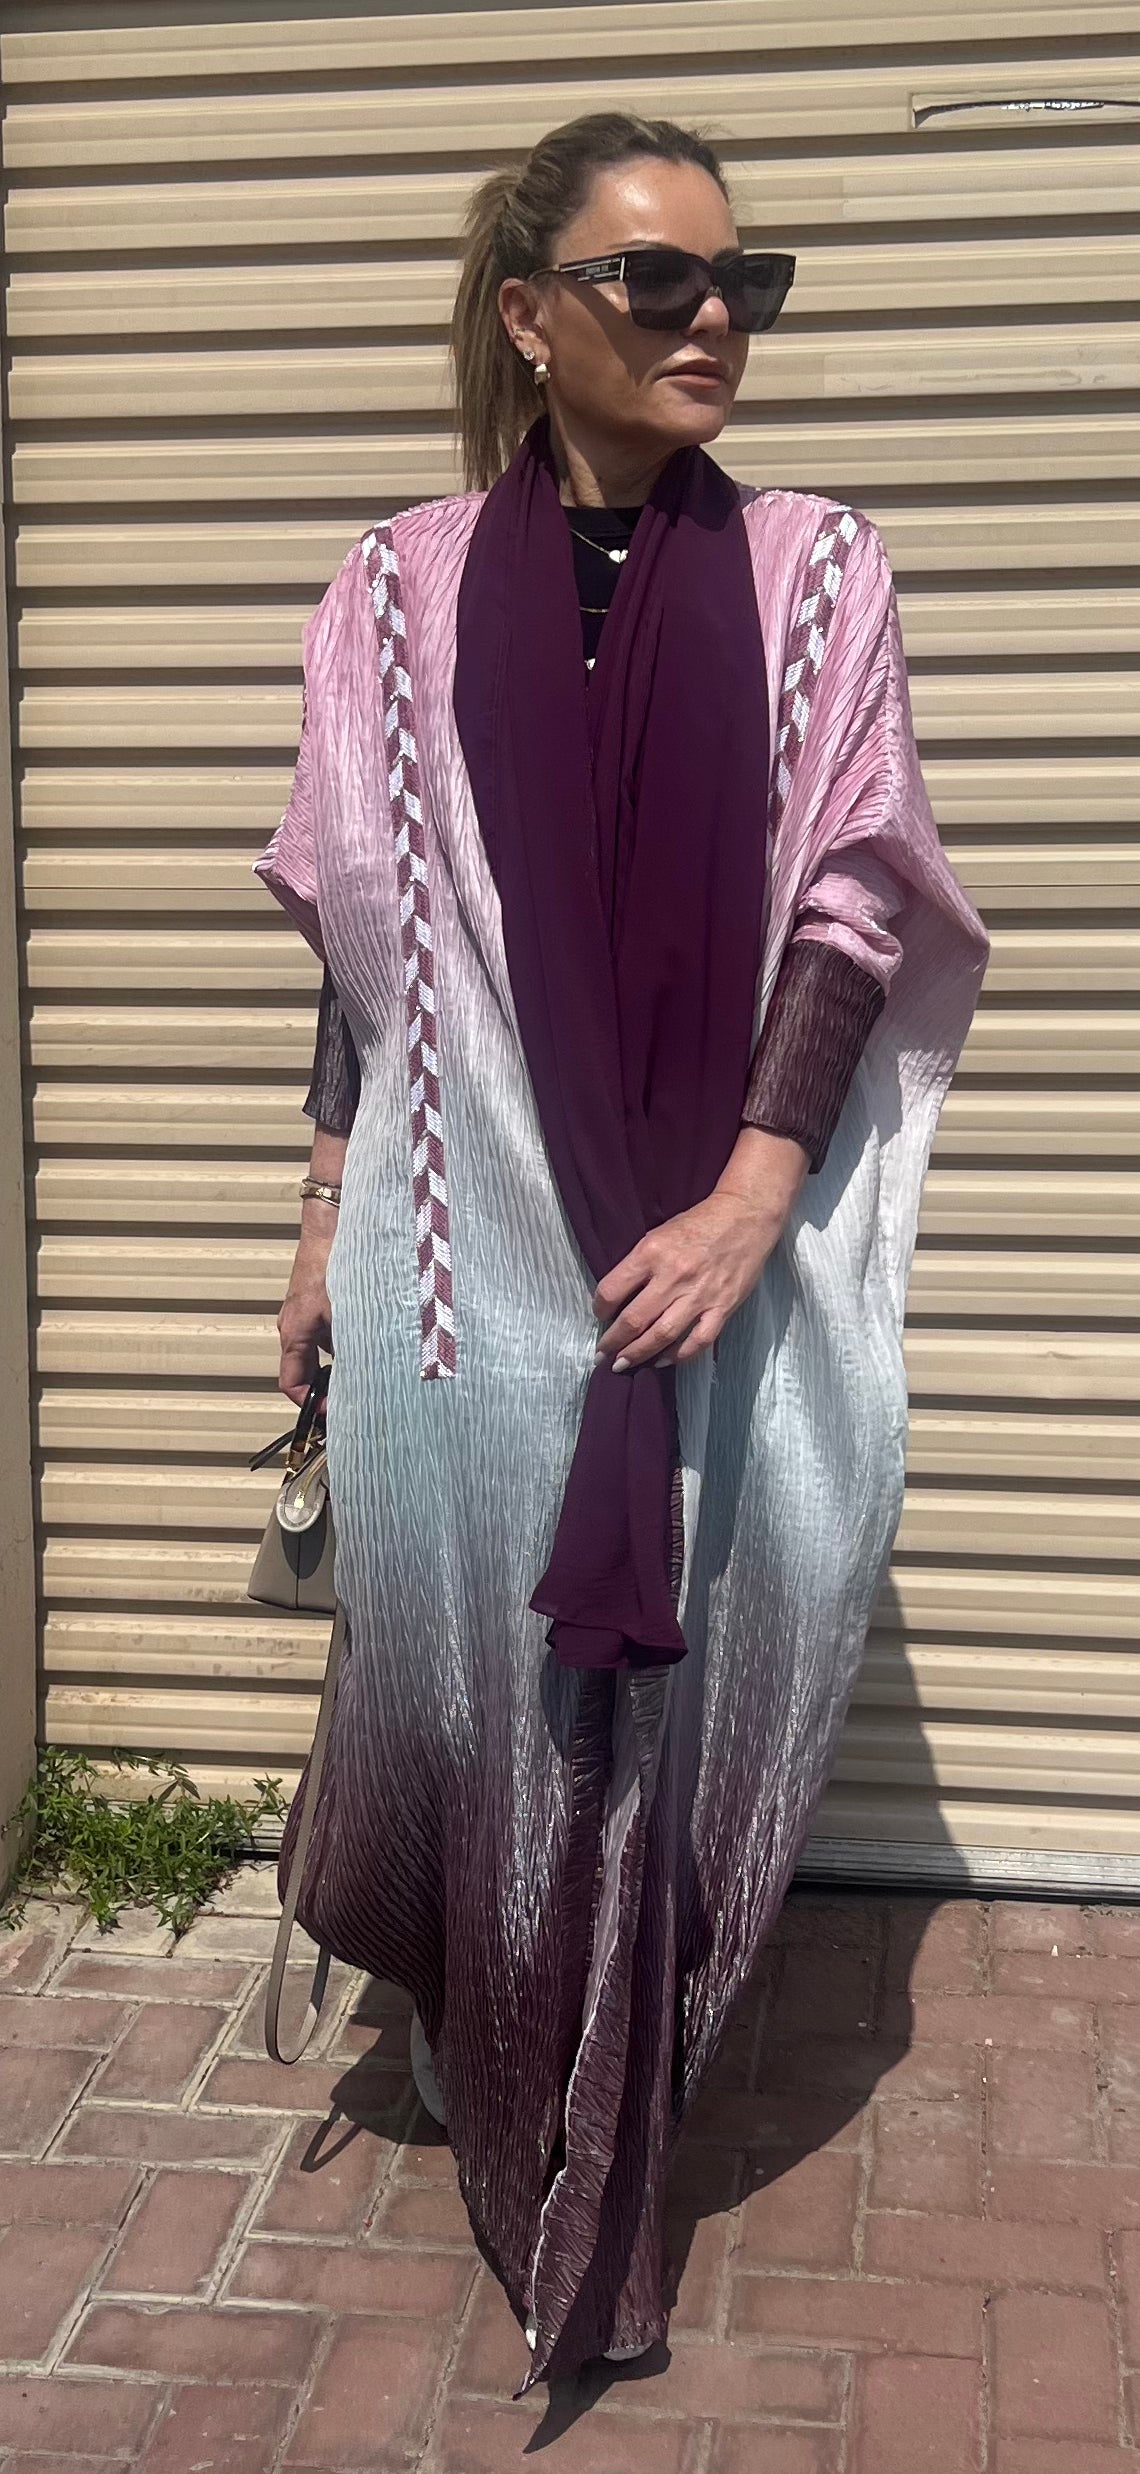 Marwa ambre stretch fabric